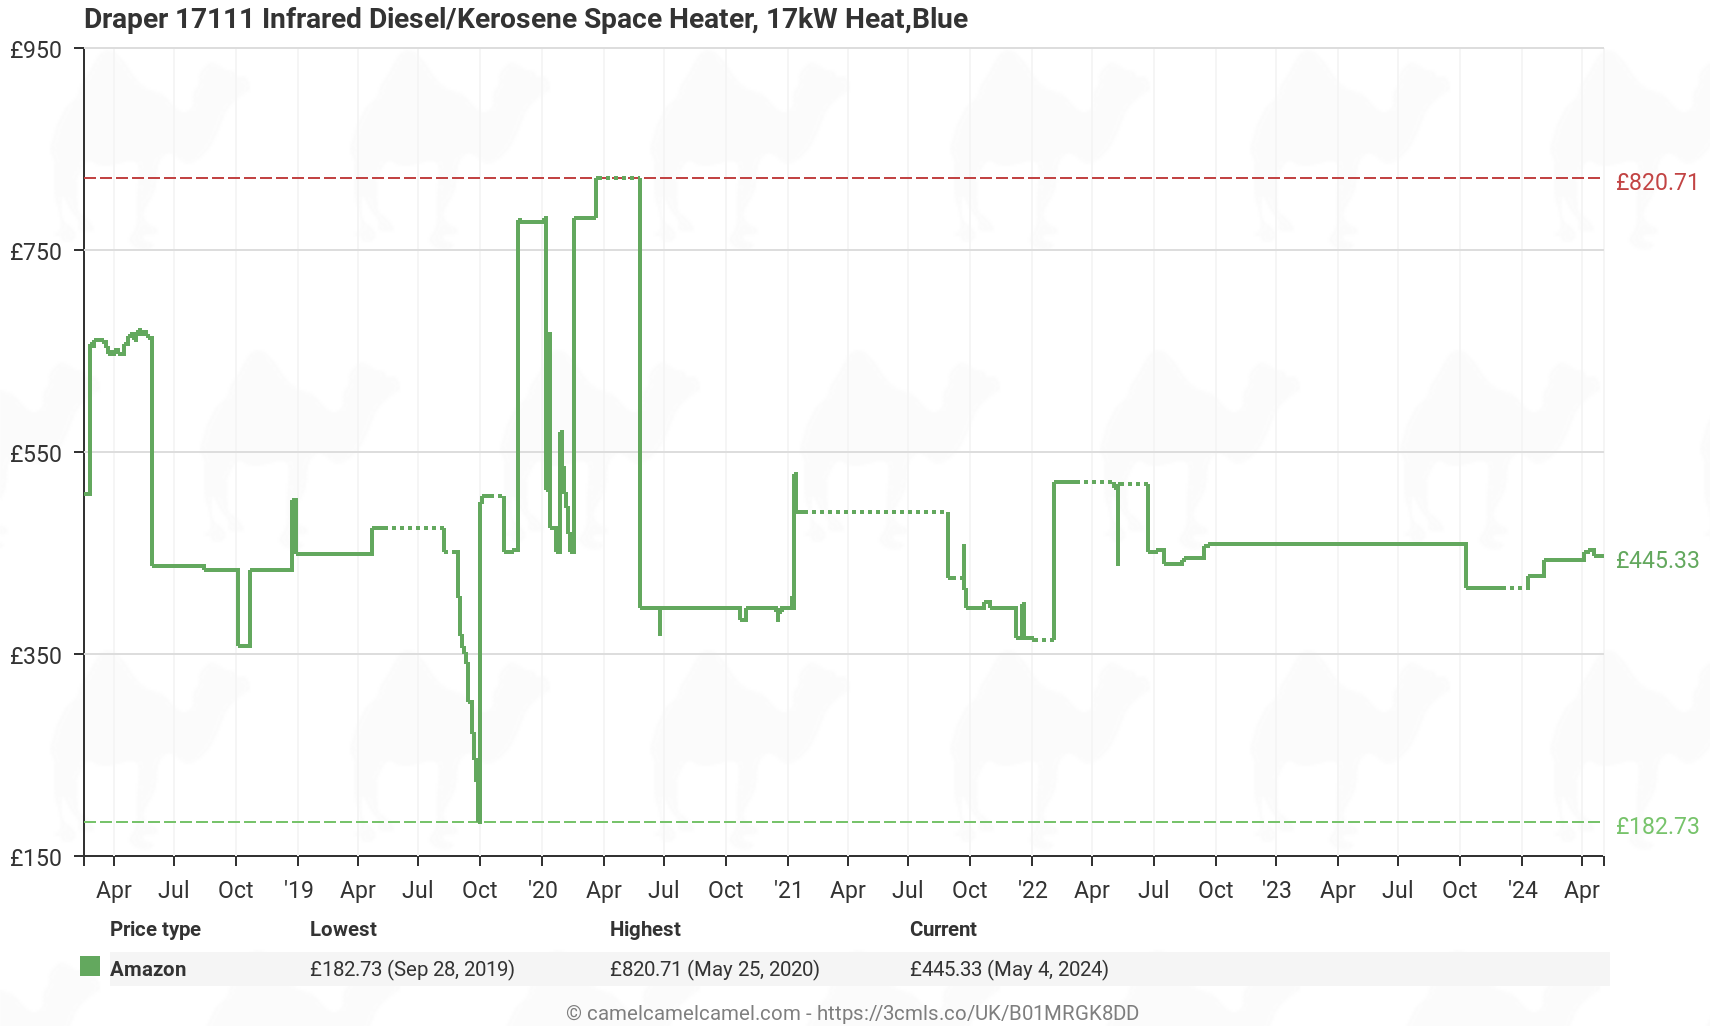 Draper 17111 Infrared Diesel/Kerosene Space Heater, 17kW Heat - Price History: B01MRGK8DD